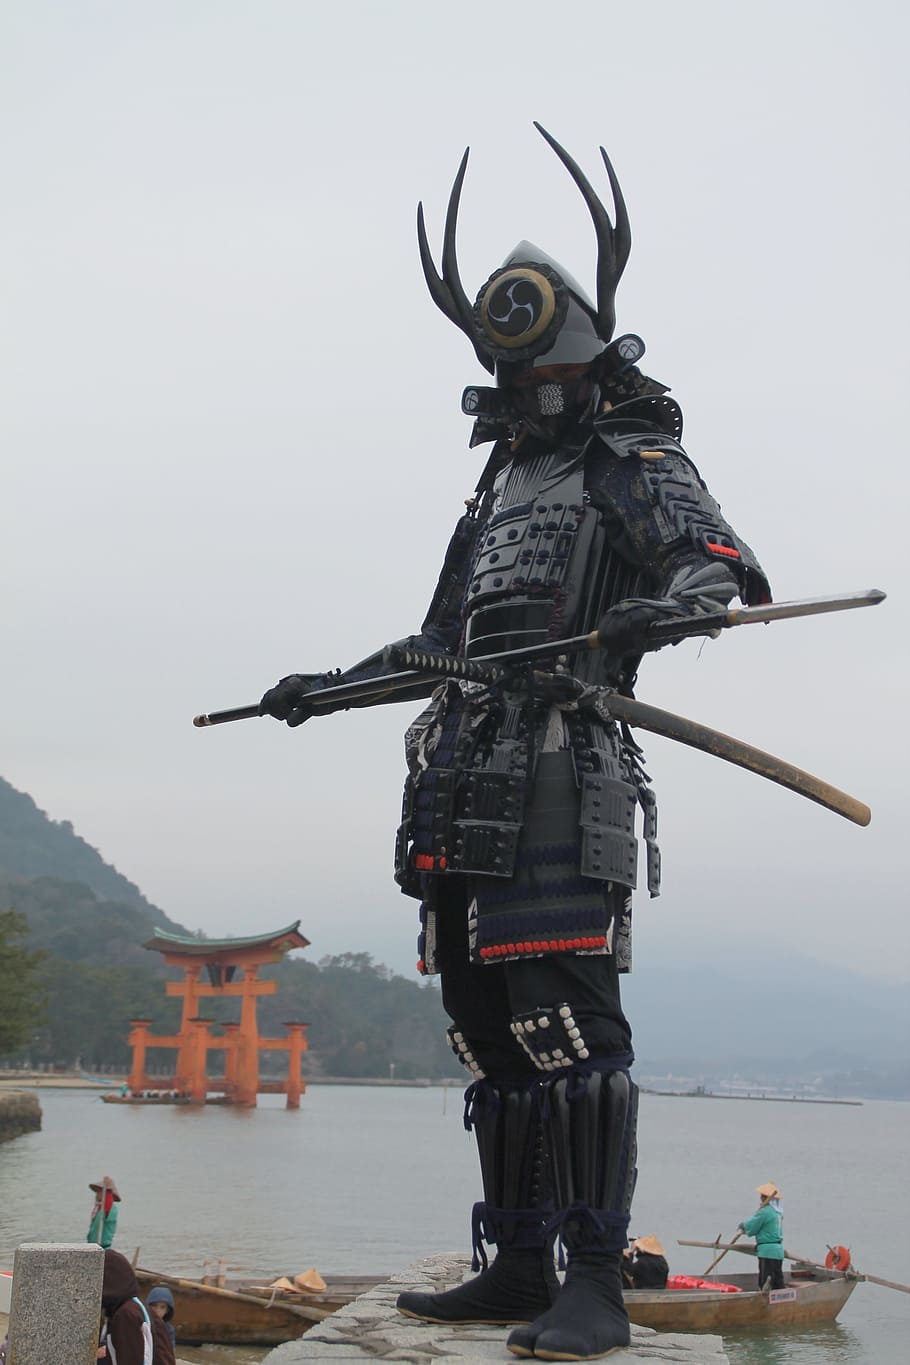 Samurai on gray concrete near body of water during daytime, miyajima